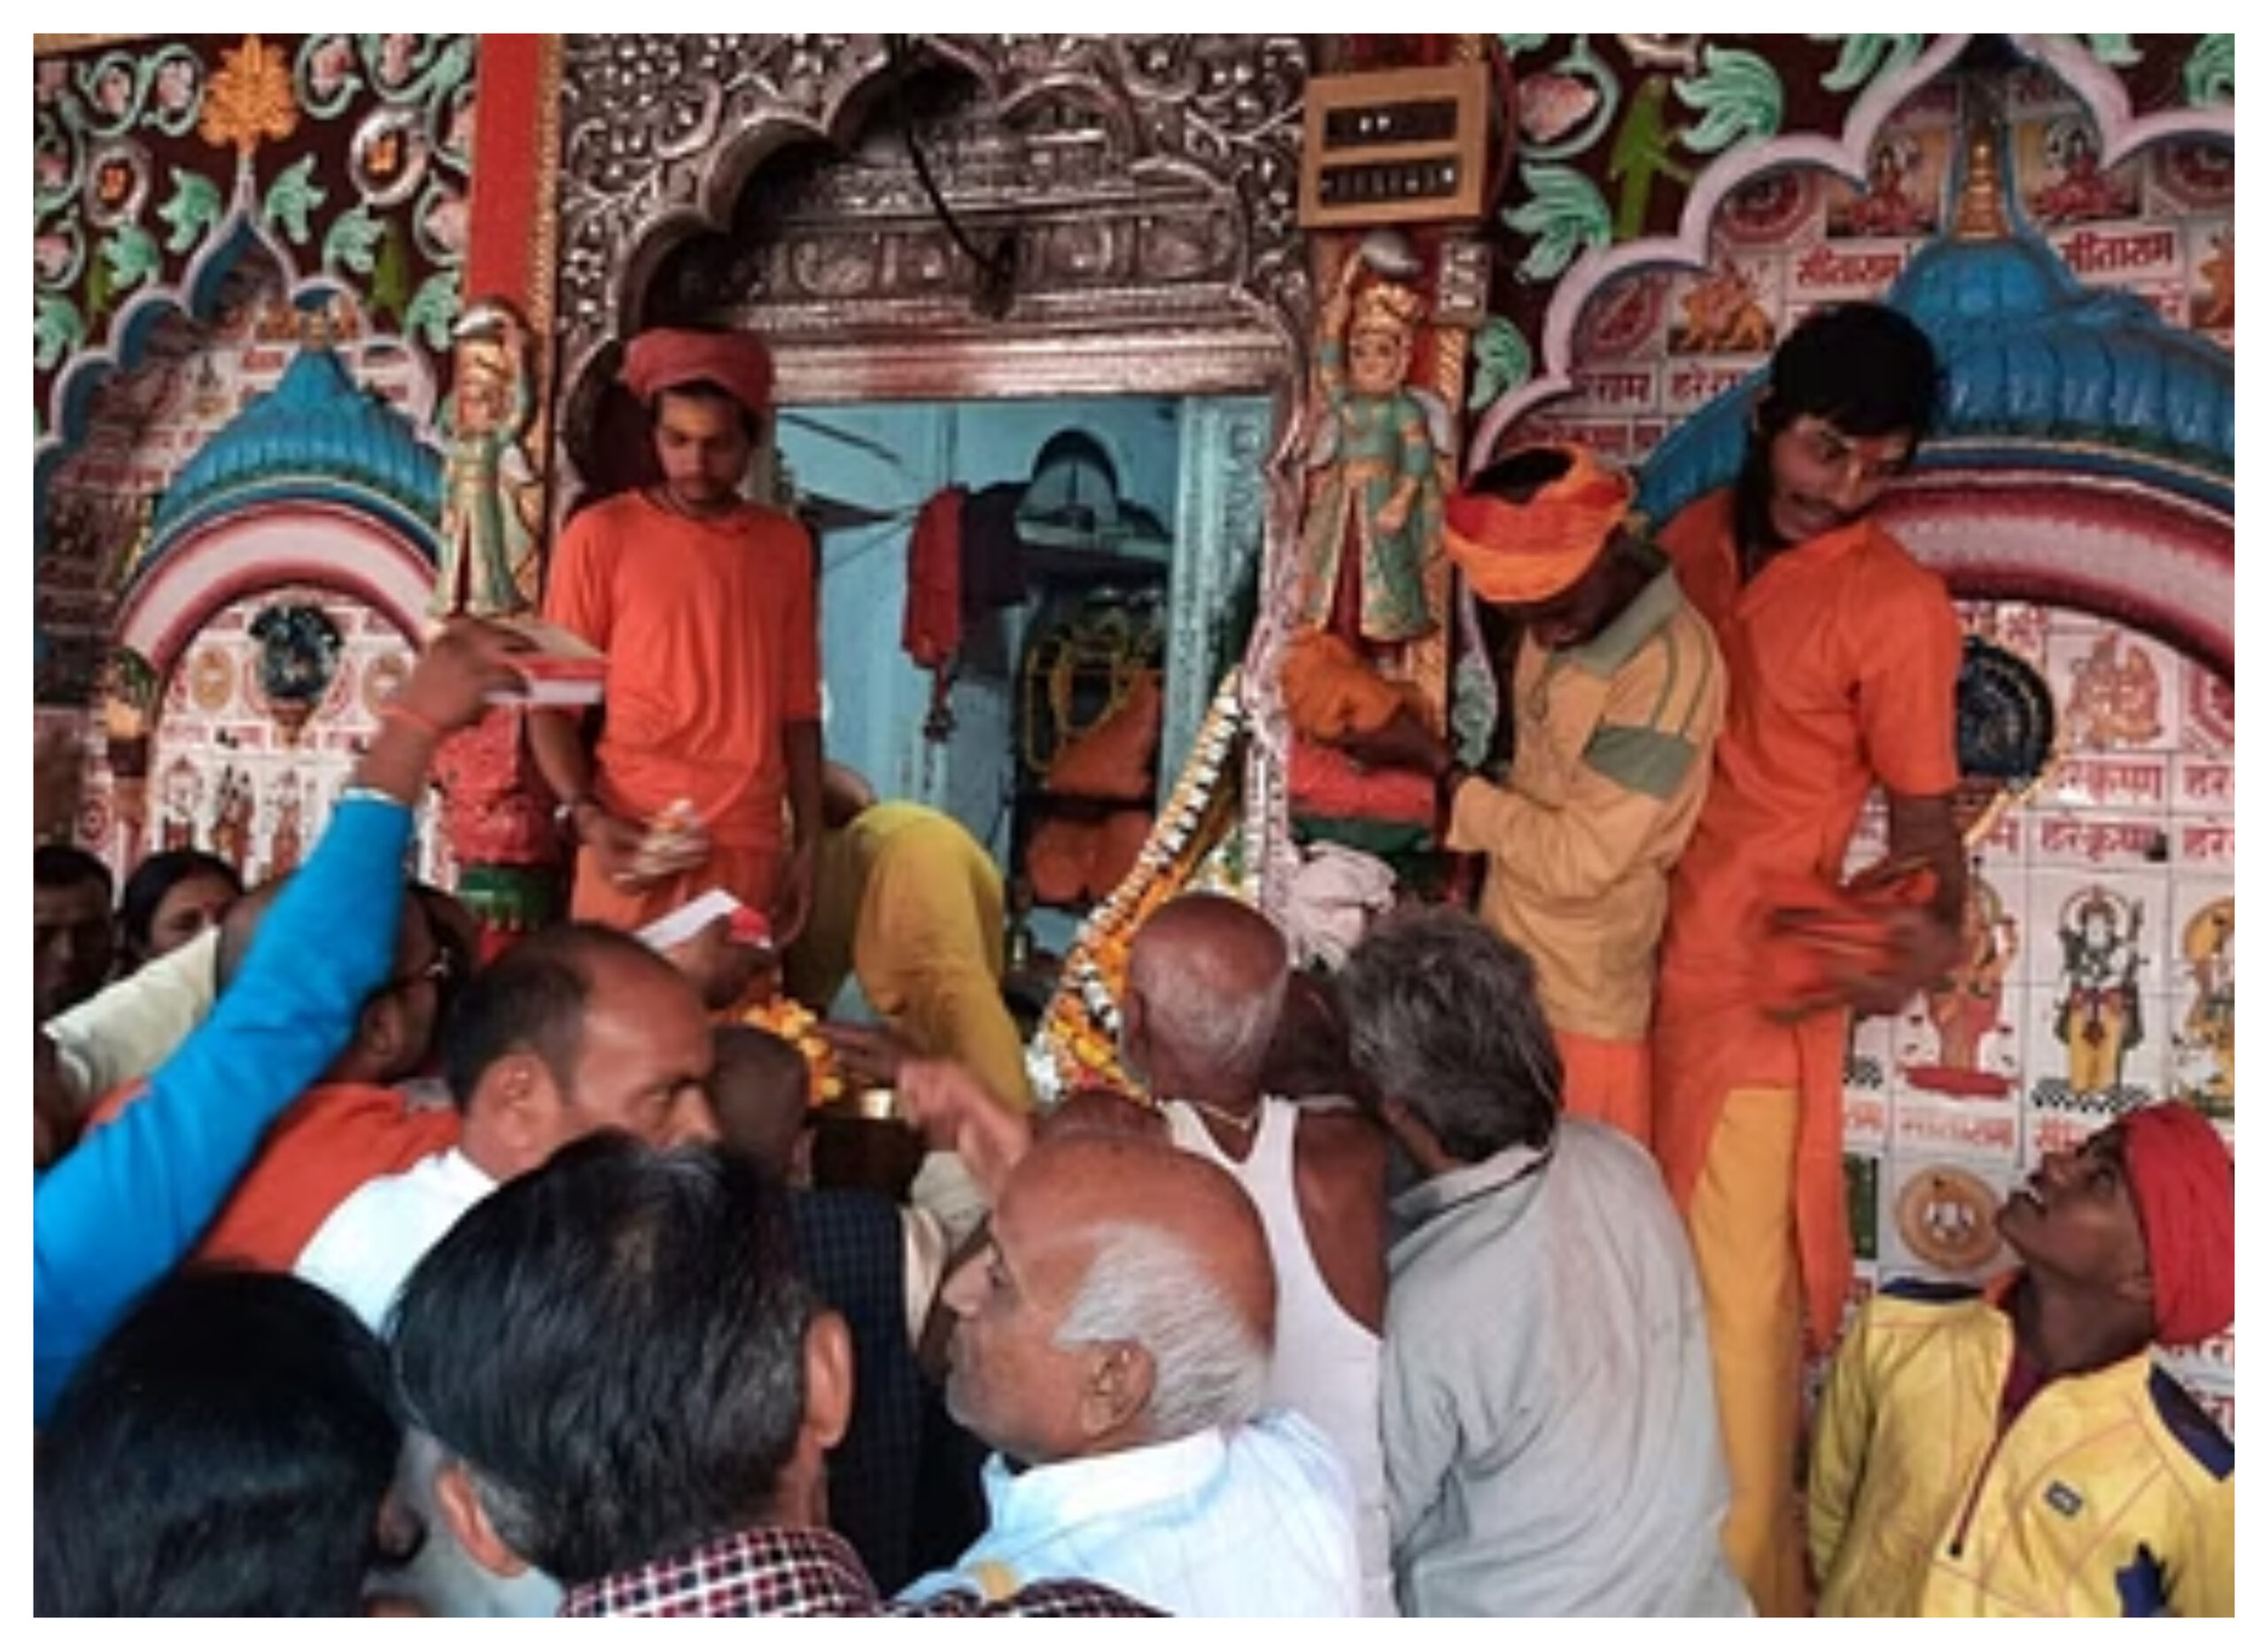 Ayodhya: Crowd of devotees gathered in the ancient Hanuman Garhi temple